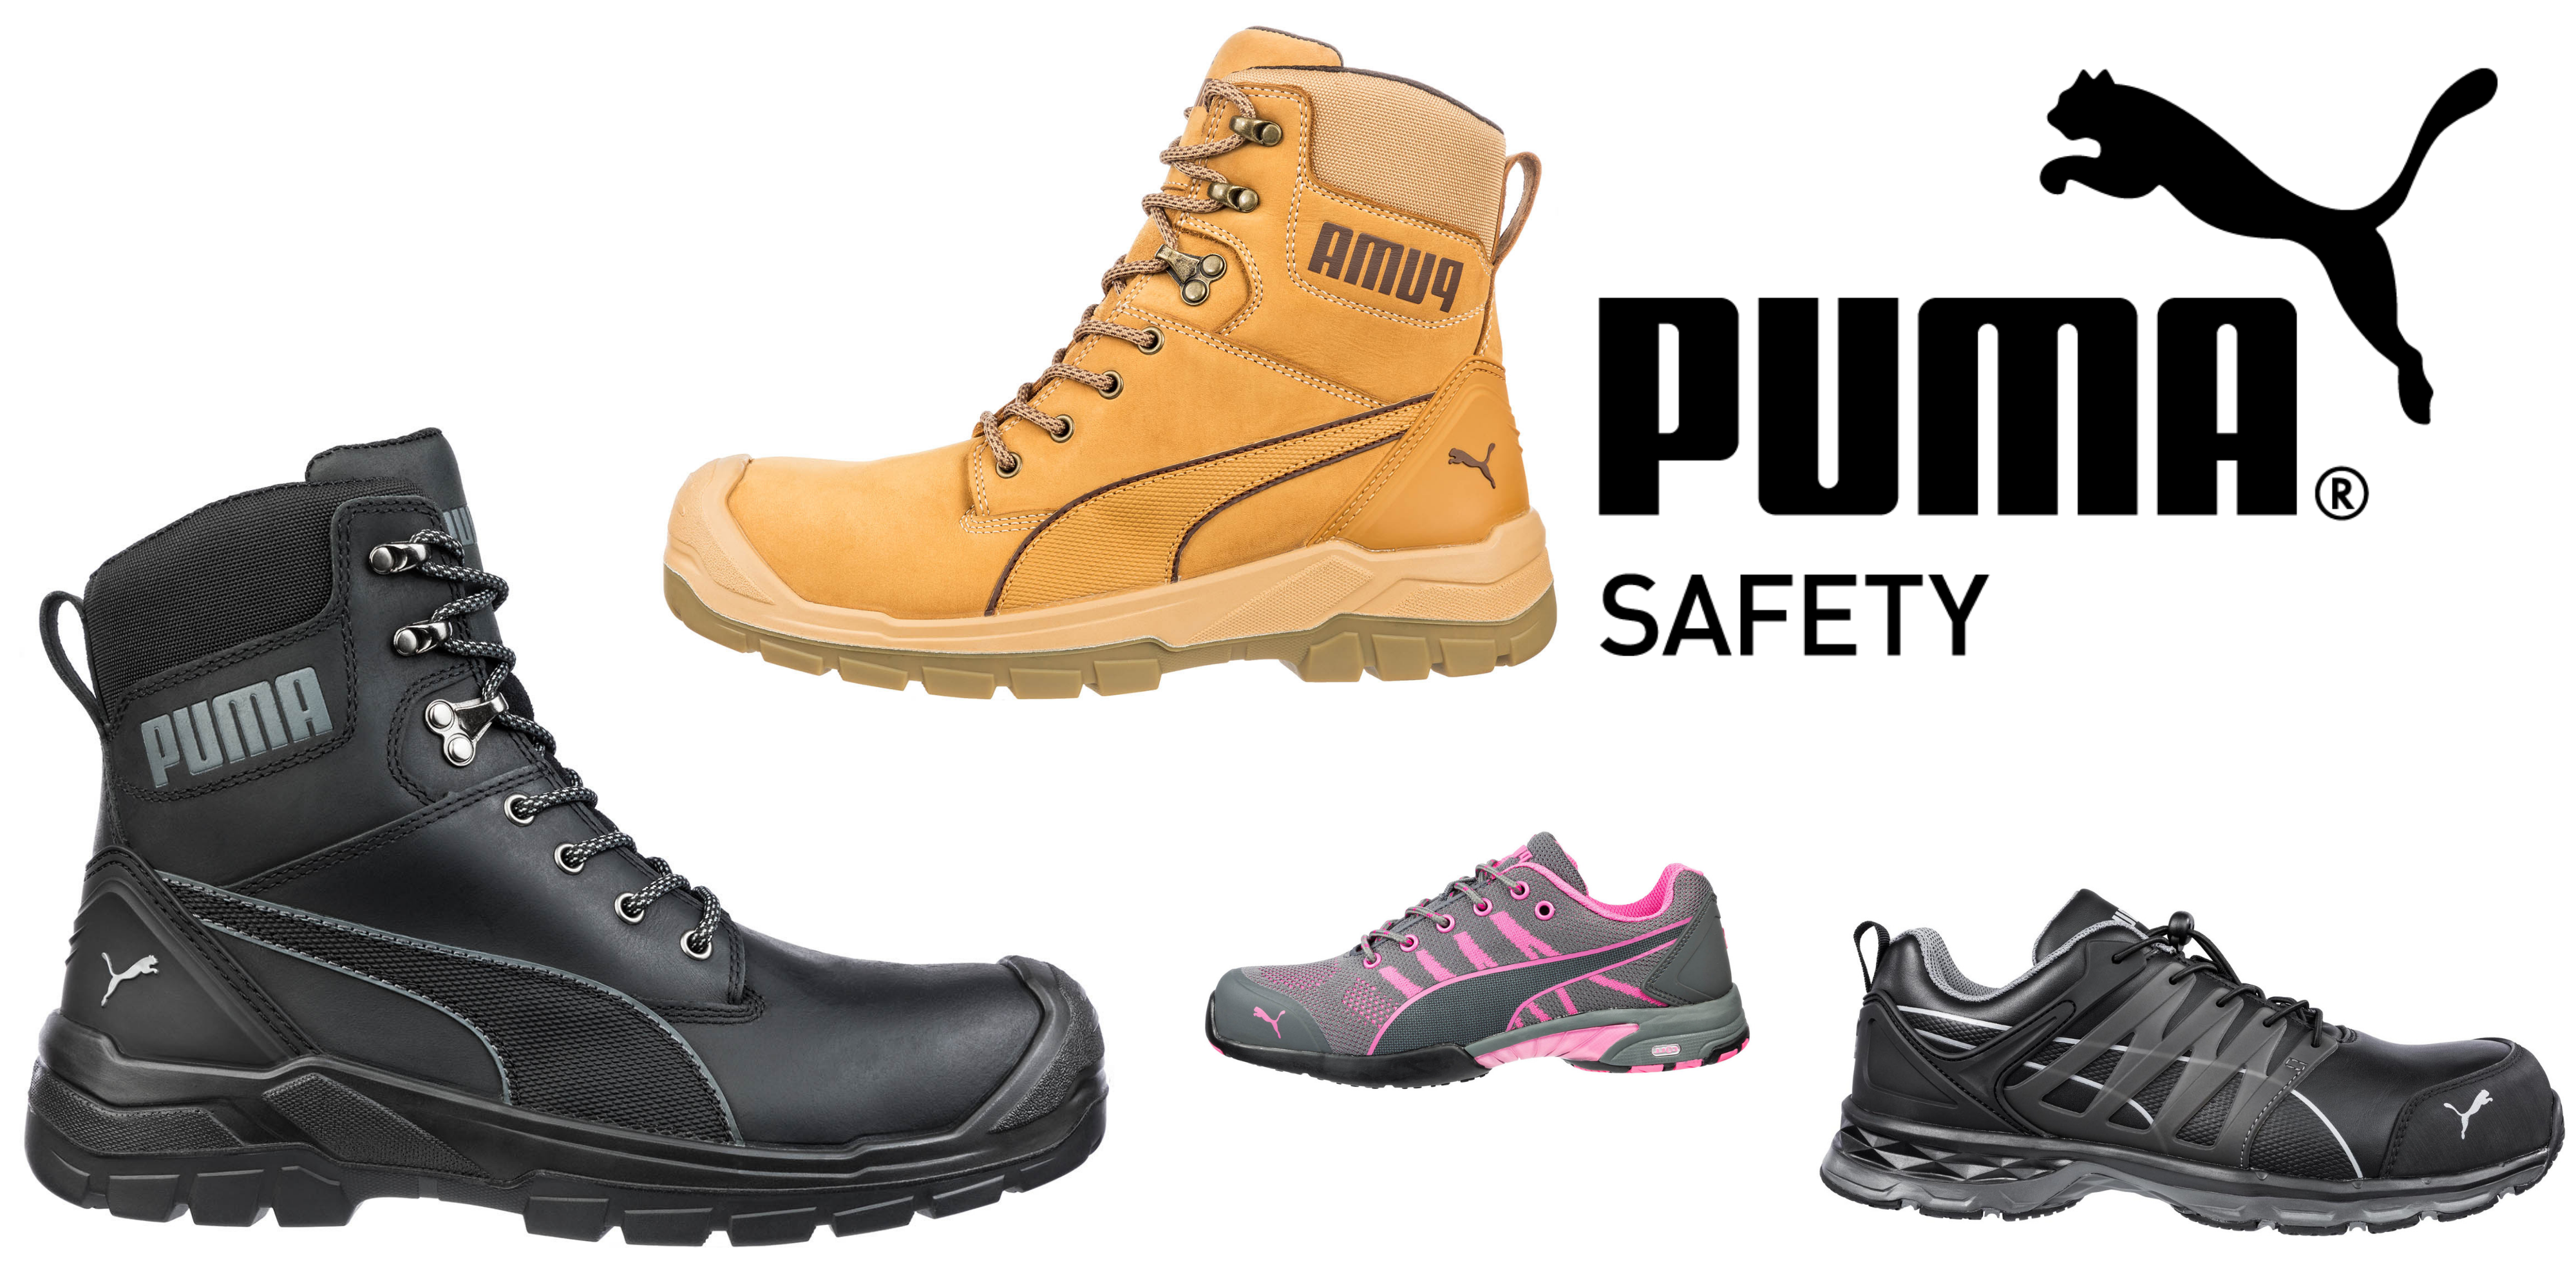 puma safety shoes uae